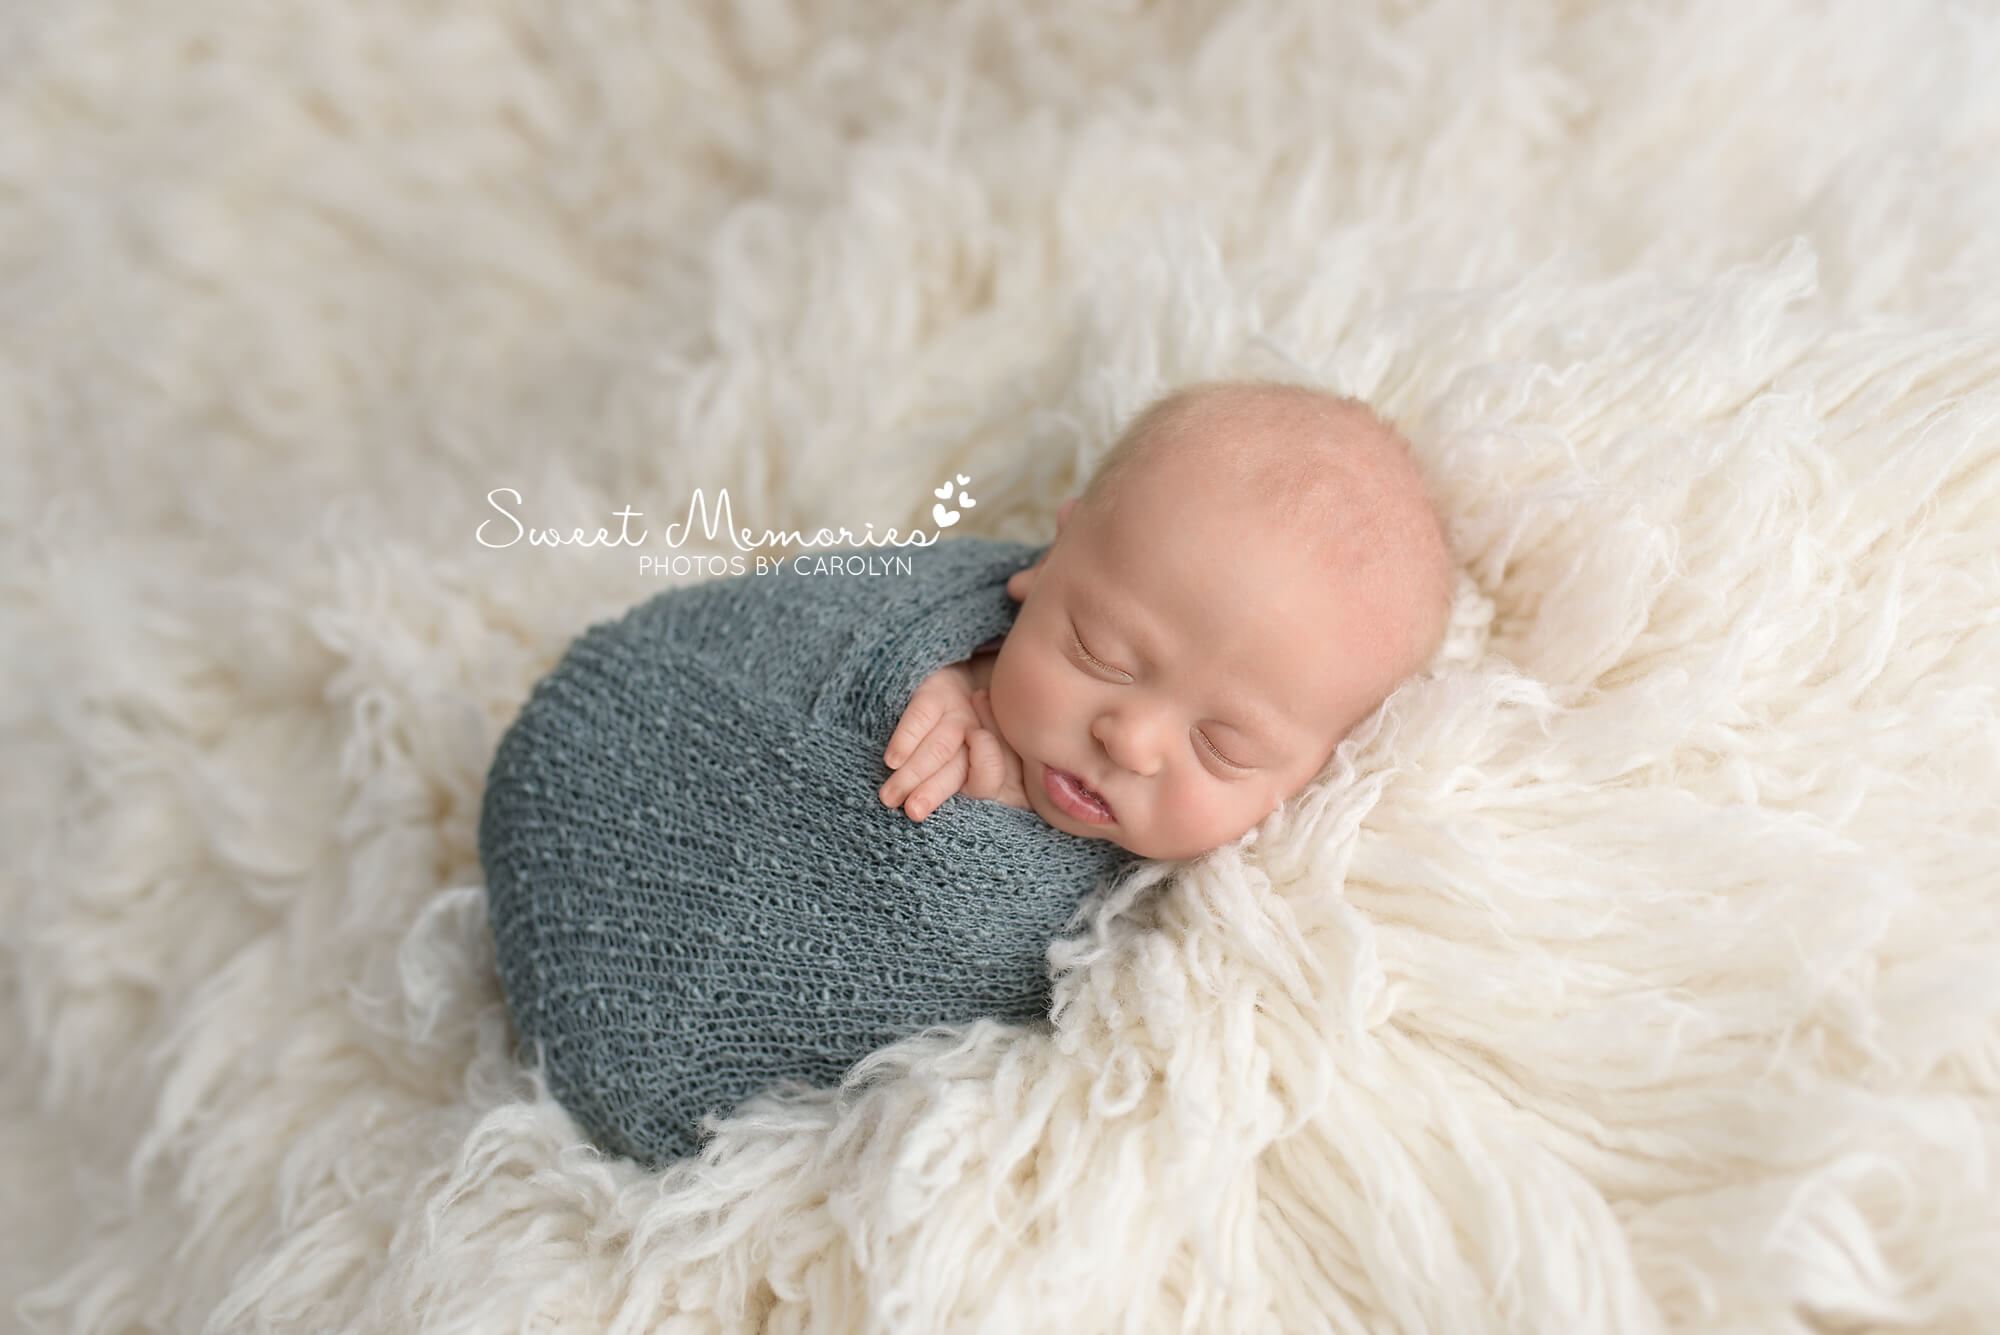 newborn baby boy swaddled in gray laying on his side | Warrington, PA newborn photographer | Sweet Memories Photos by Carolyn, Quakertown Pennsylvania